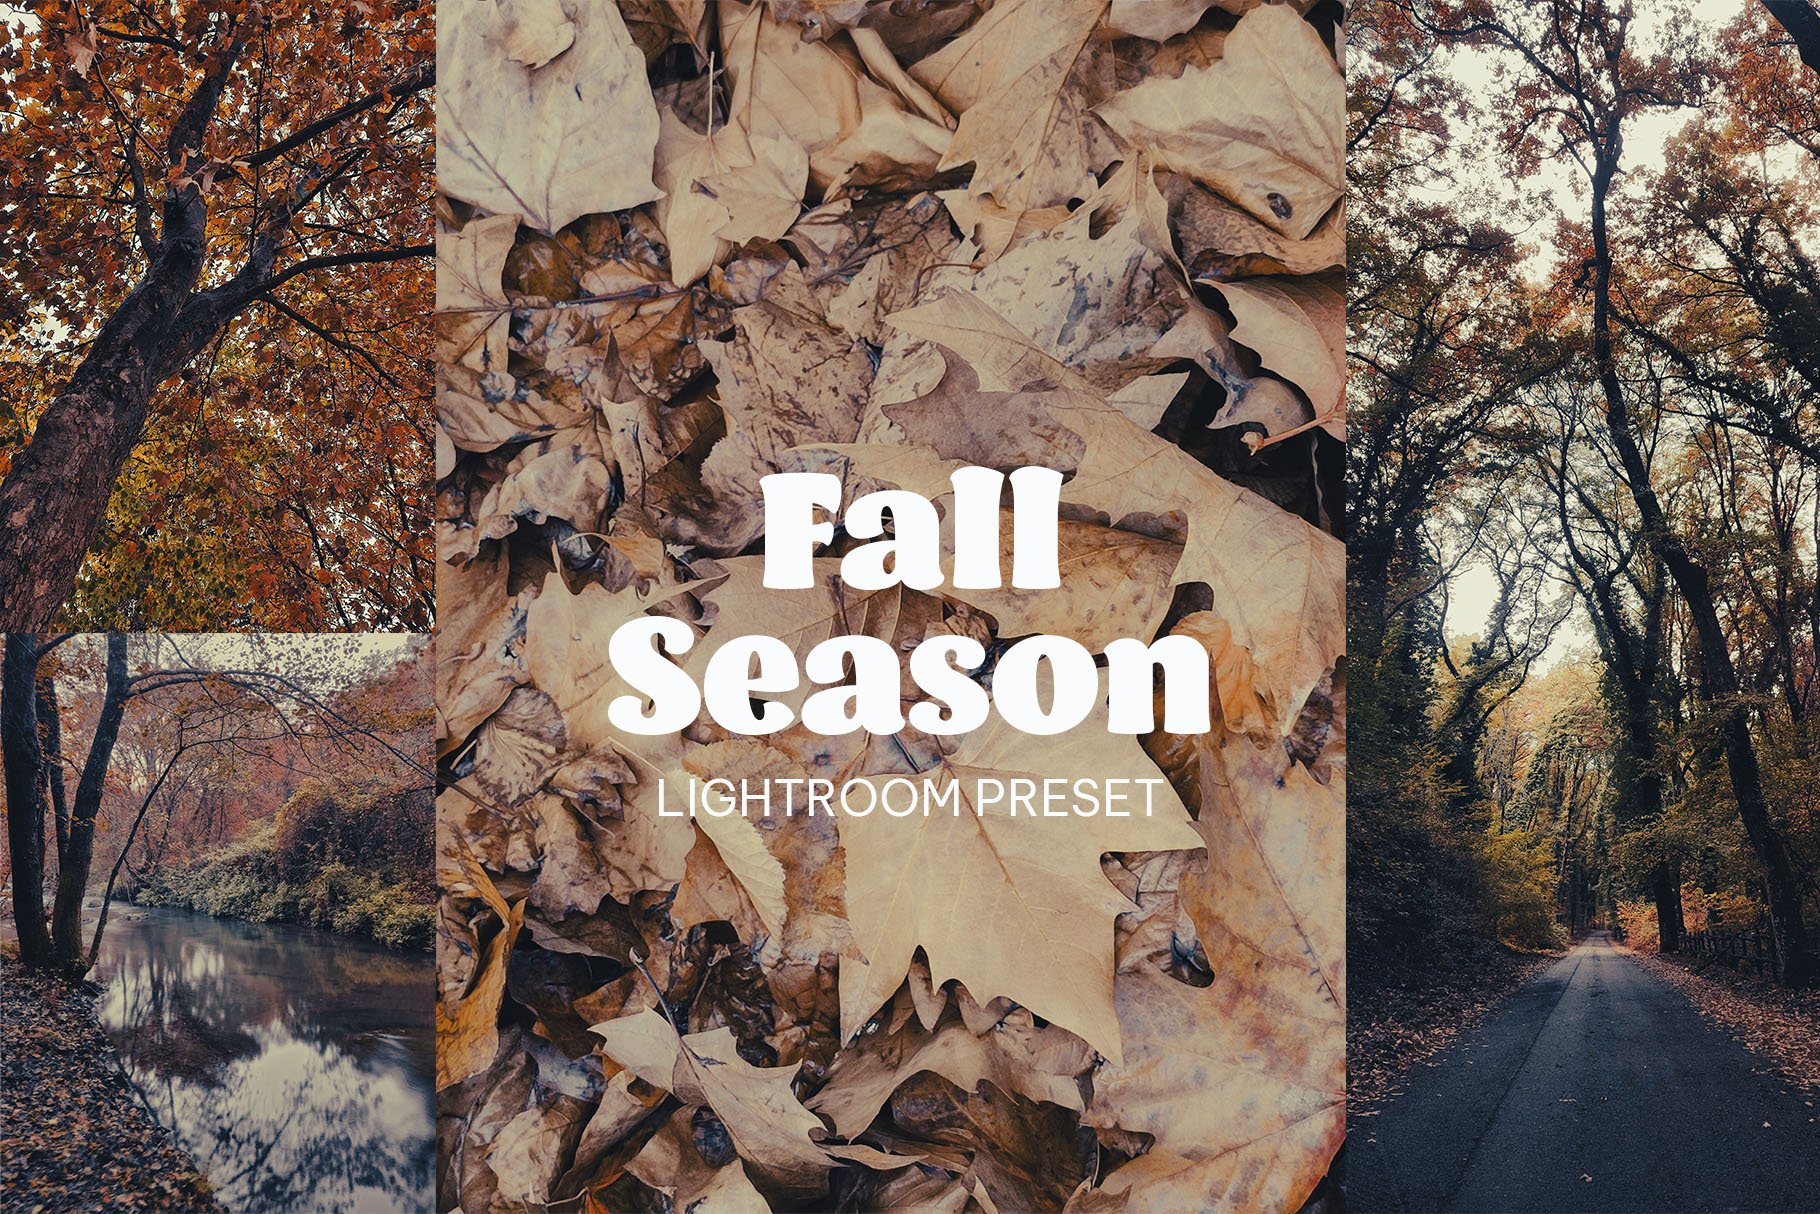 Fall Season - 6 Lightroom Presetscover image.